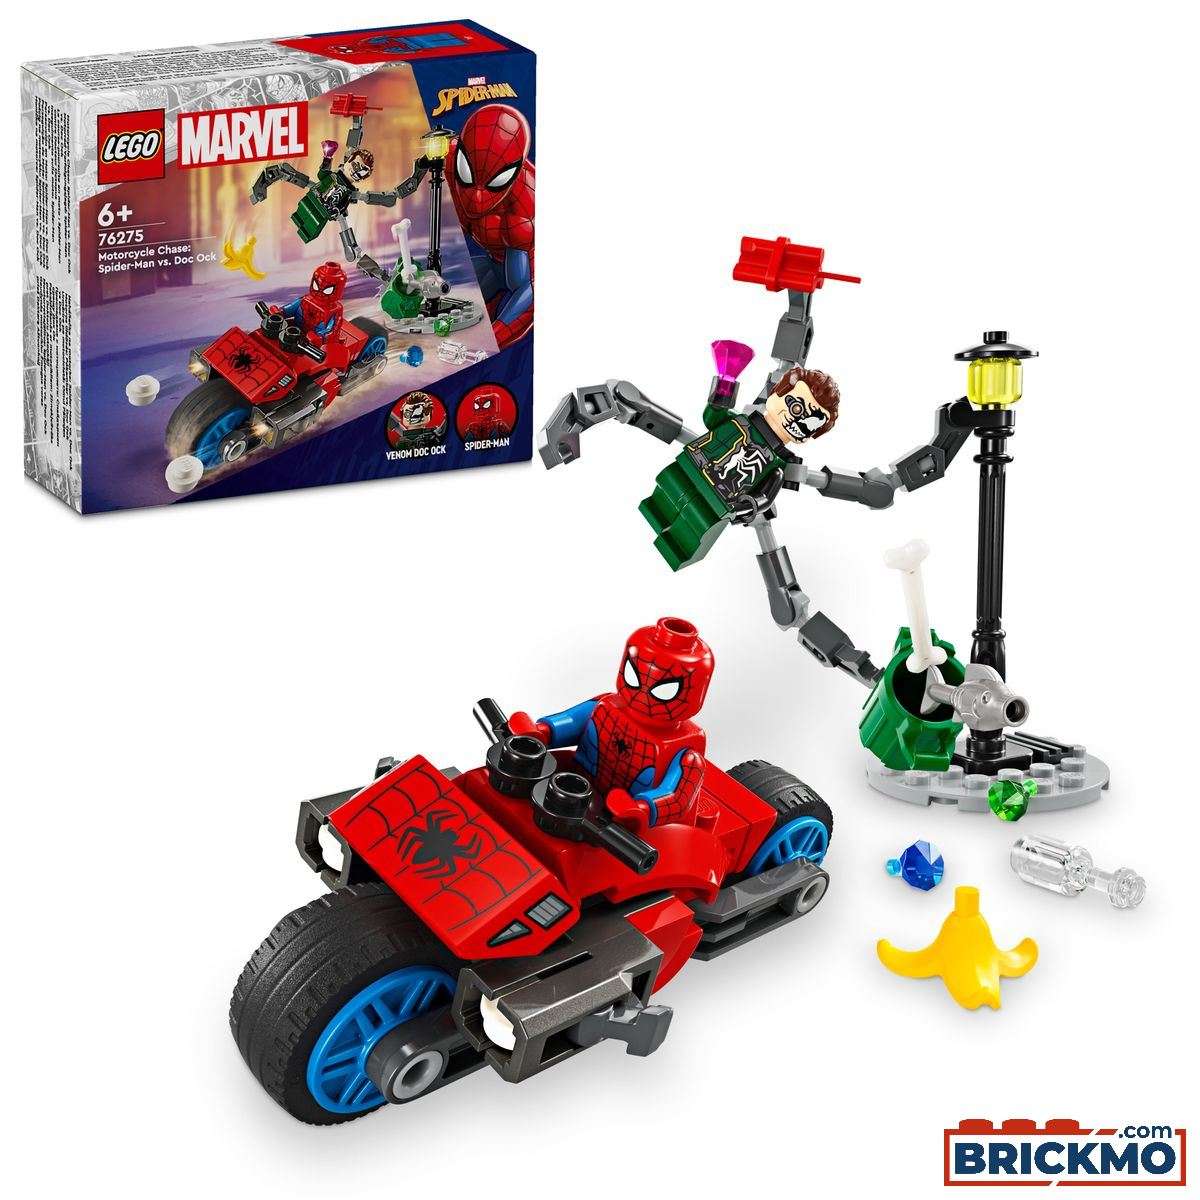 LEGO Marvel Super Heroes 76275 Motorcycle Chase: Spider-Man vs. Doc Ock 76275